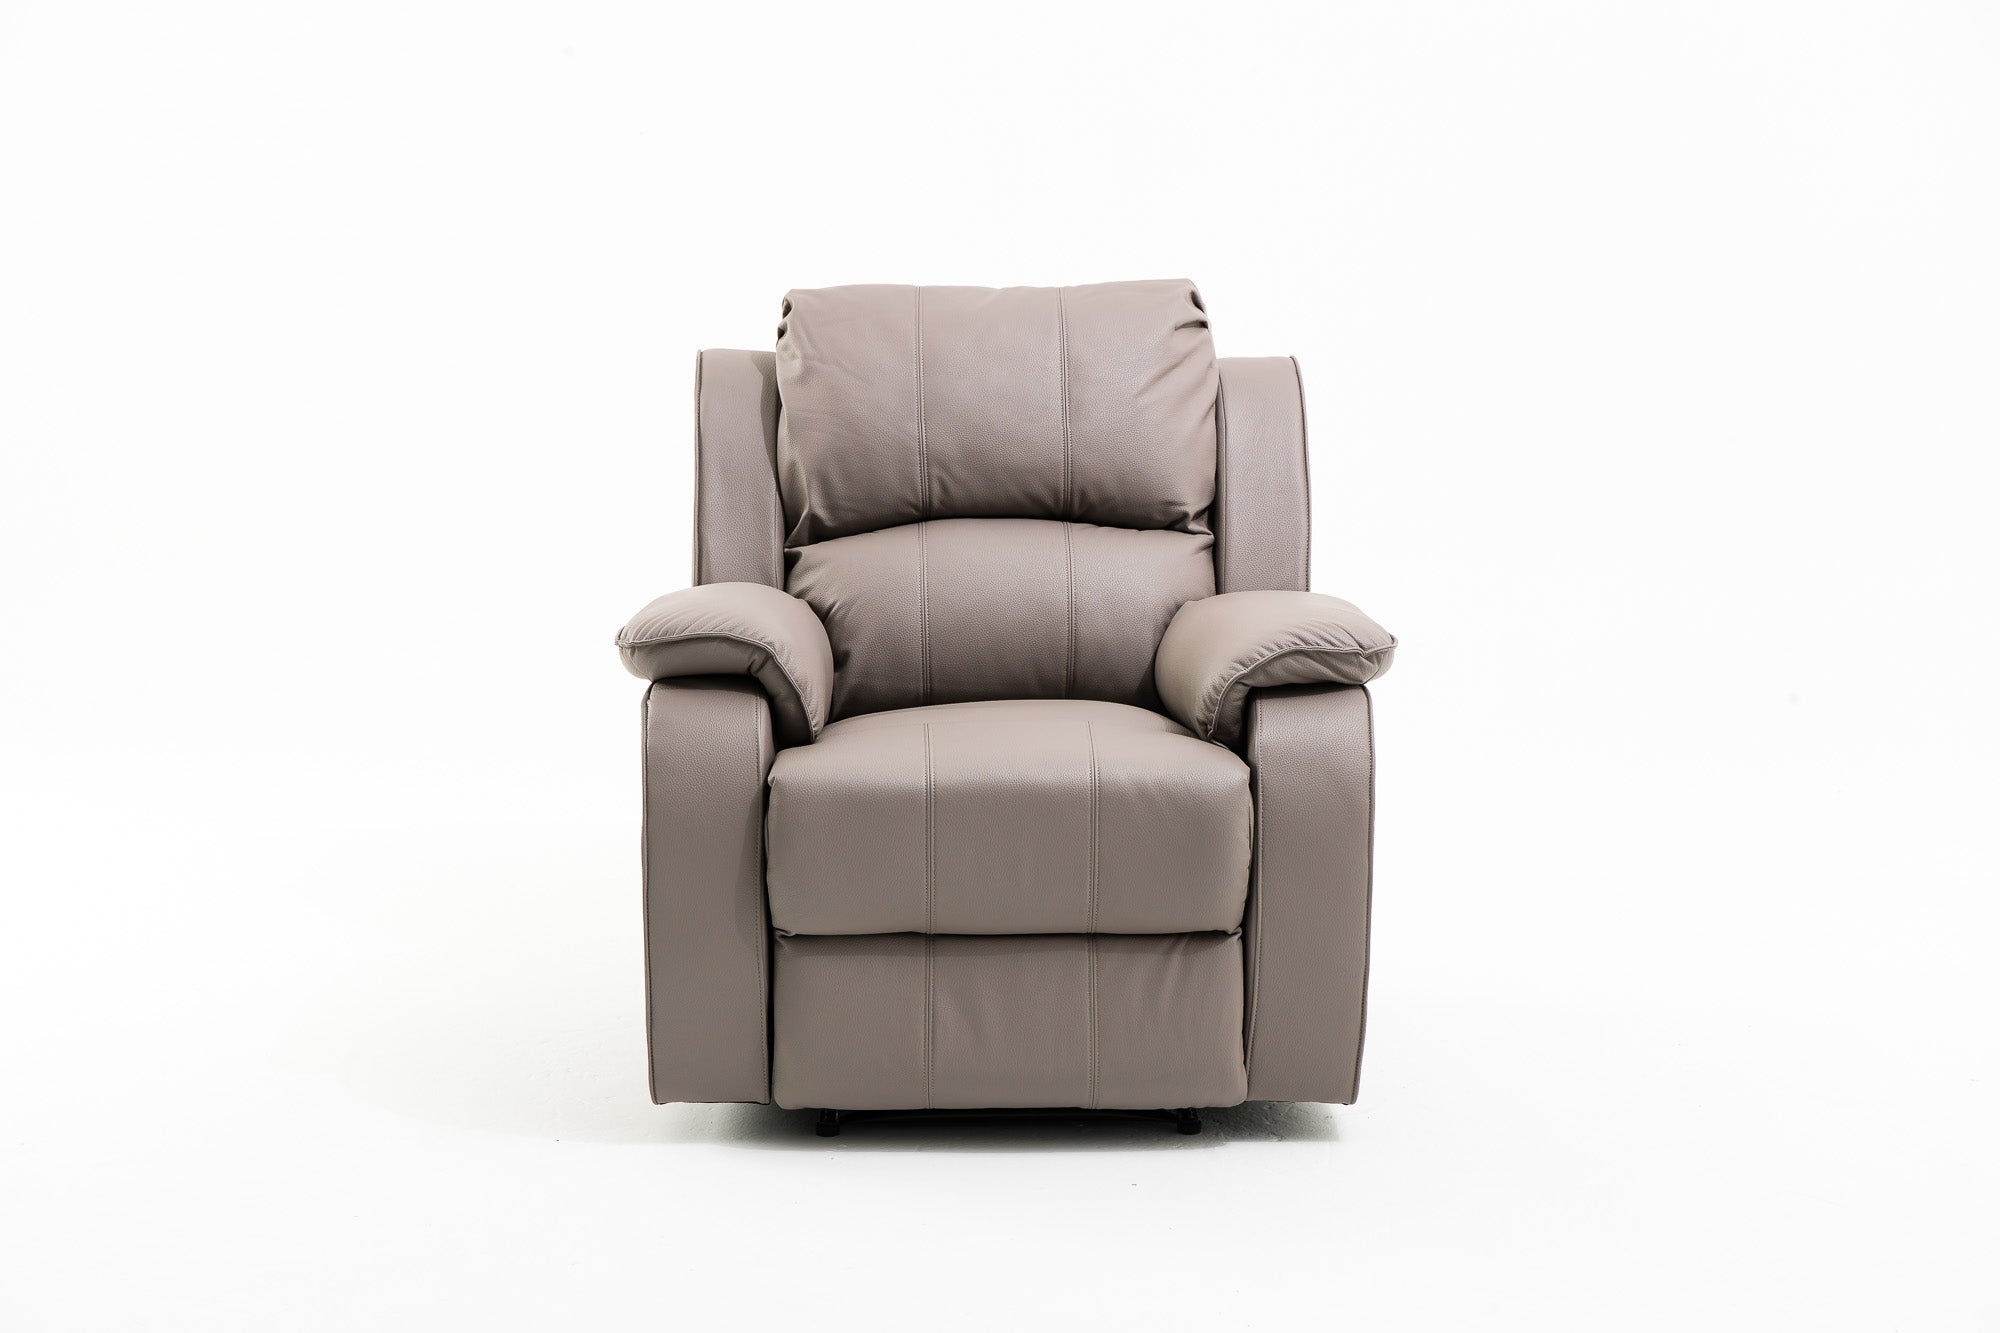 Balgas Manual Recliner Armchair More Than Just A Sofa